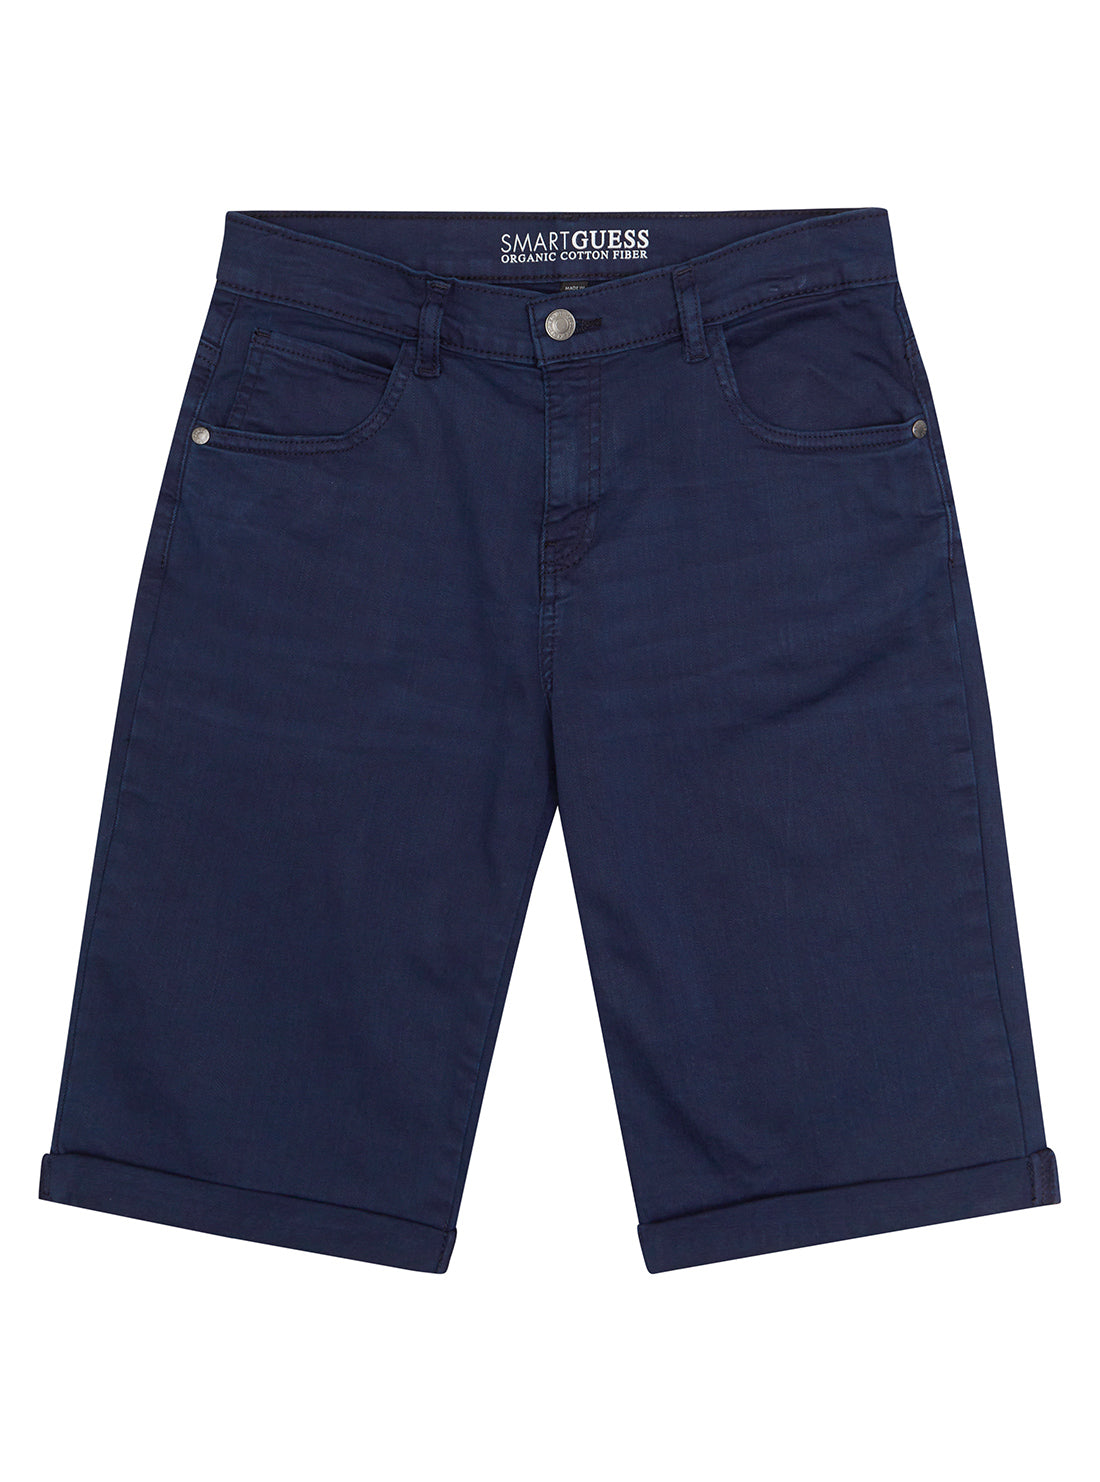 GUESS Big Boy Blue Stretch Denim Shorts (7-16) L1RD03WE620 Front View